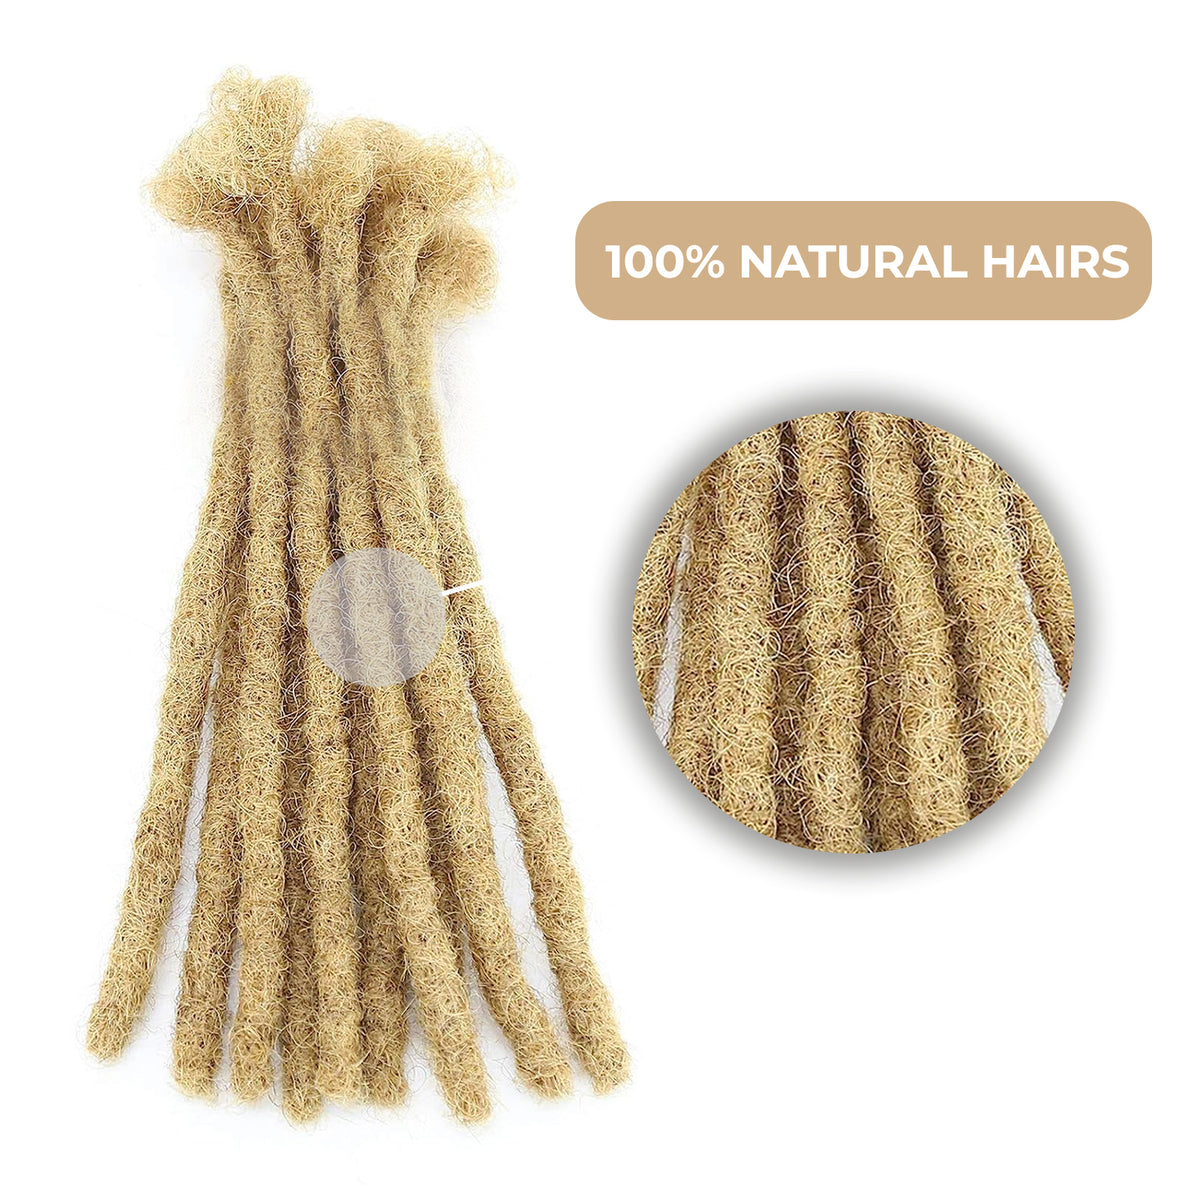 100% Human Hair Blonde Dreadlock Extensions 16Inch 10 Strands Handmade Natural Loc Extensions Human Hair Bundle Dreads Extensions For Woman & Men (27/Honey Blonde 16inch length 0.6cm Width)